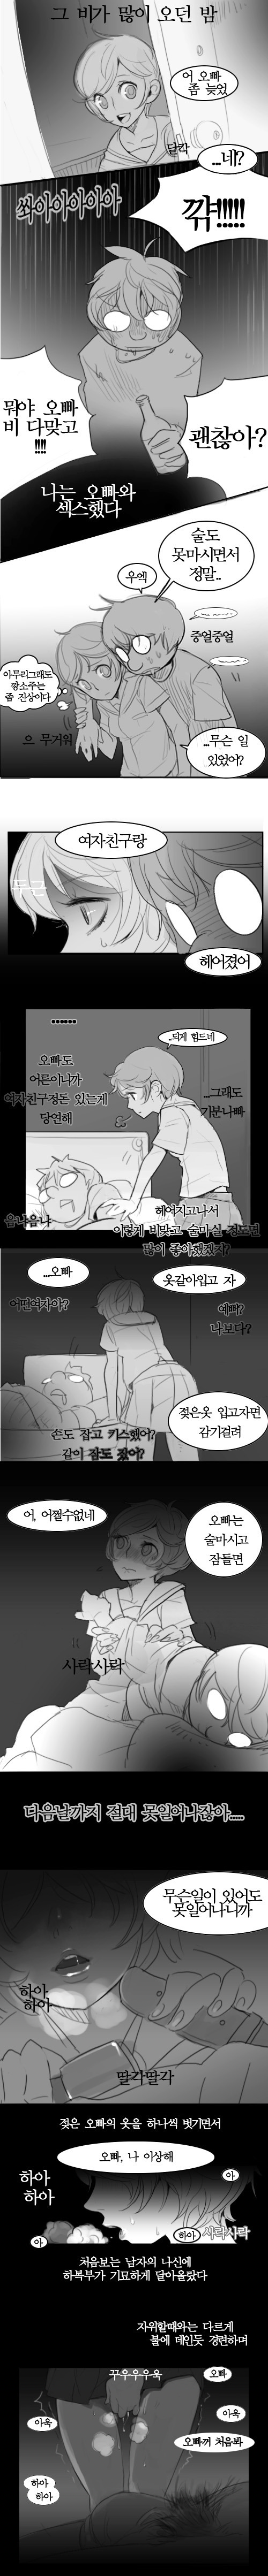 [(asdf)] Oh nan-hee - Chapter 1 [ㅁㄴㅇㄹ] 오난희 - 1부